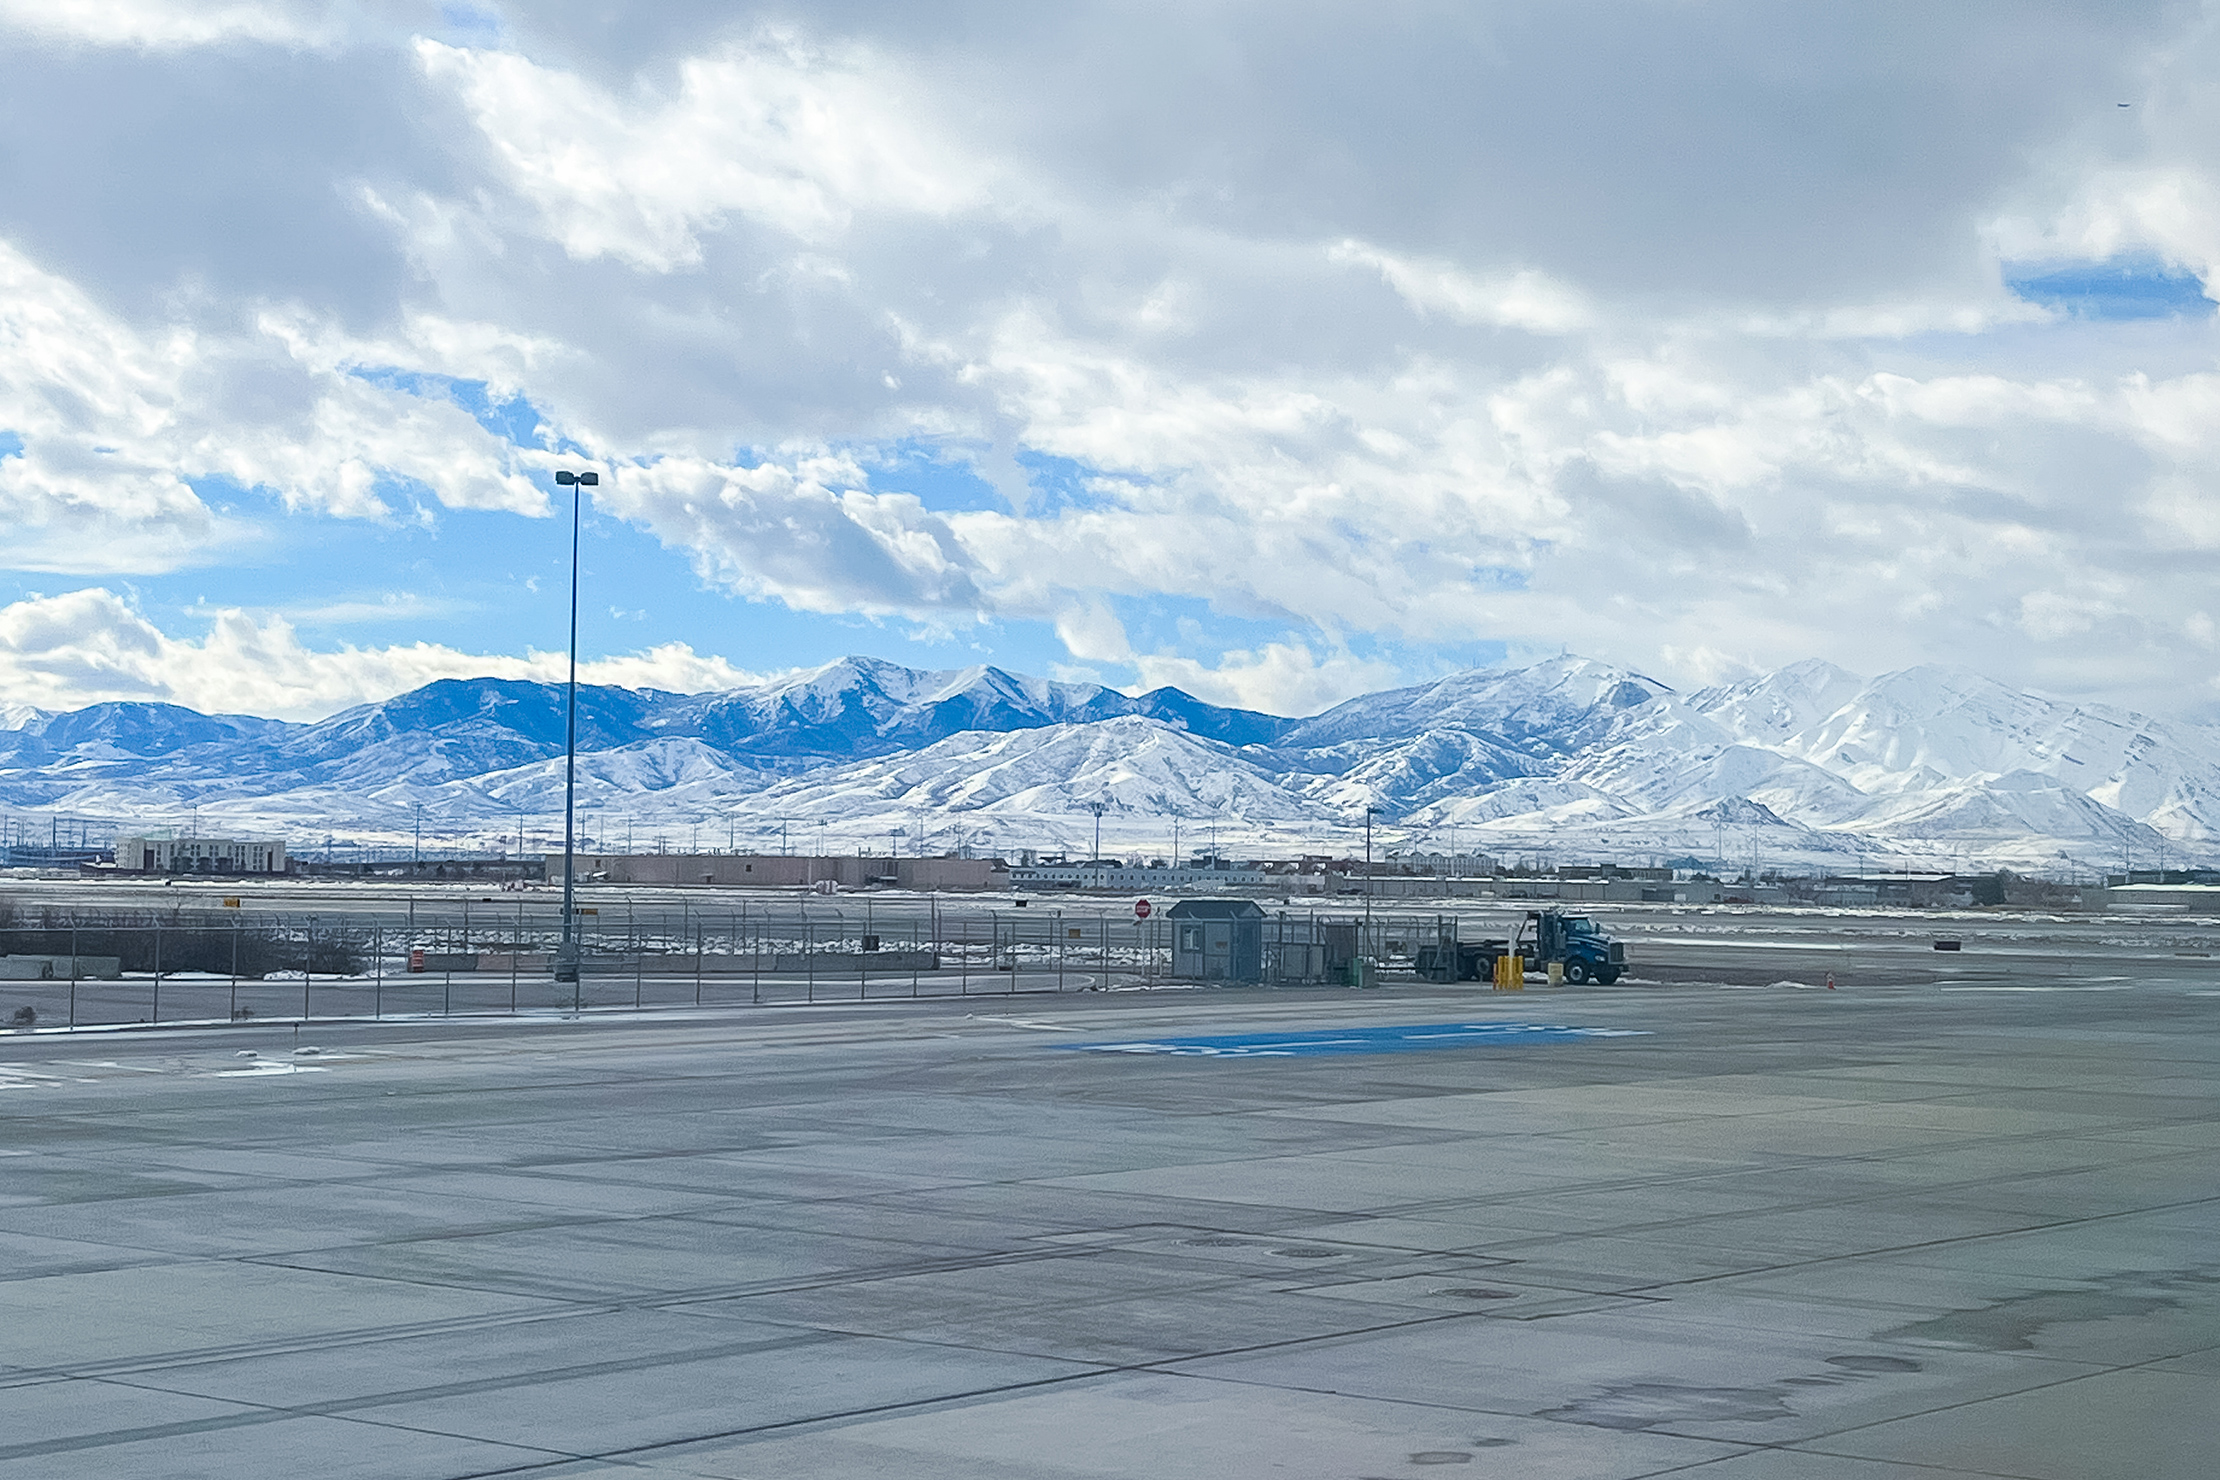 Snowy Mountain in Salt Lake City, Utah